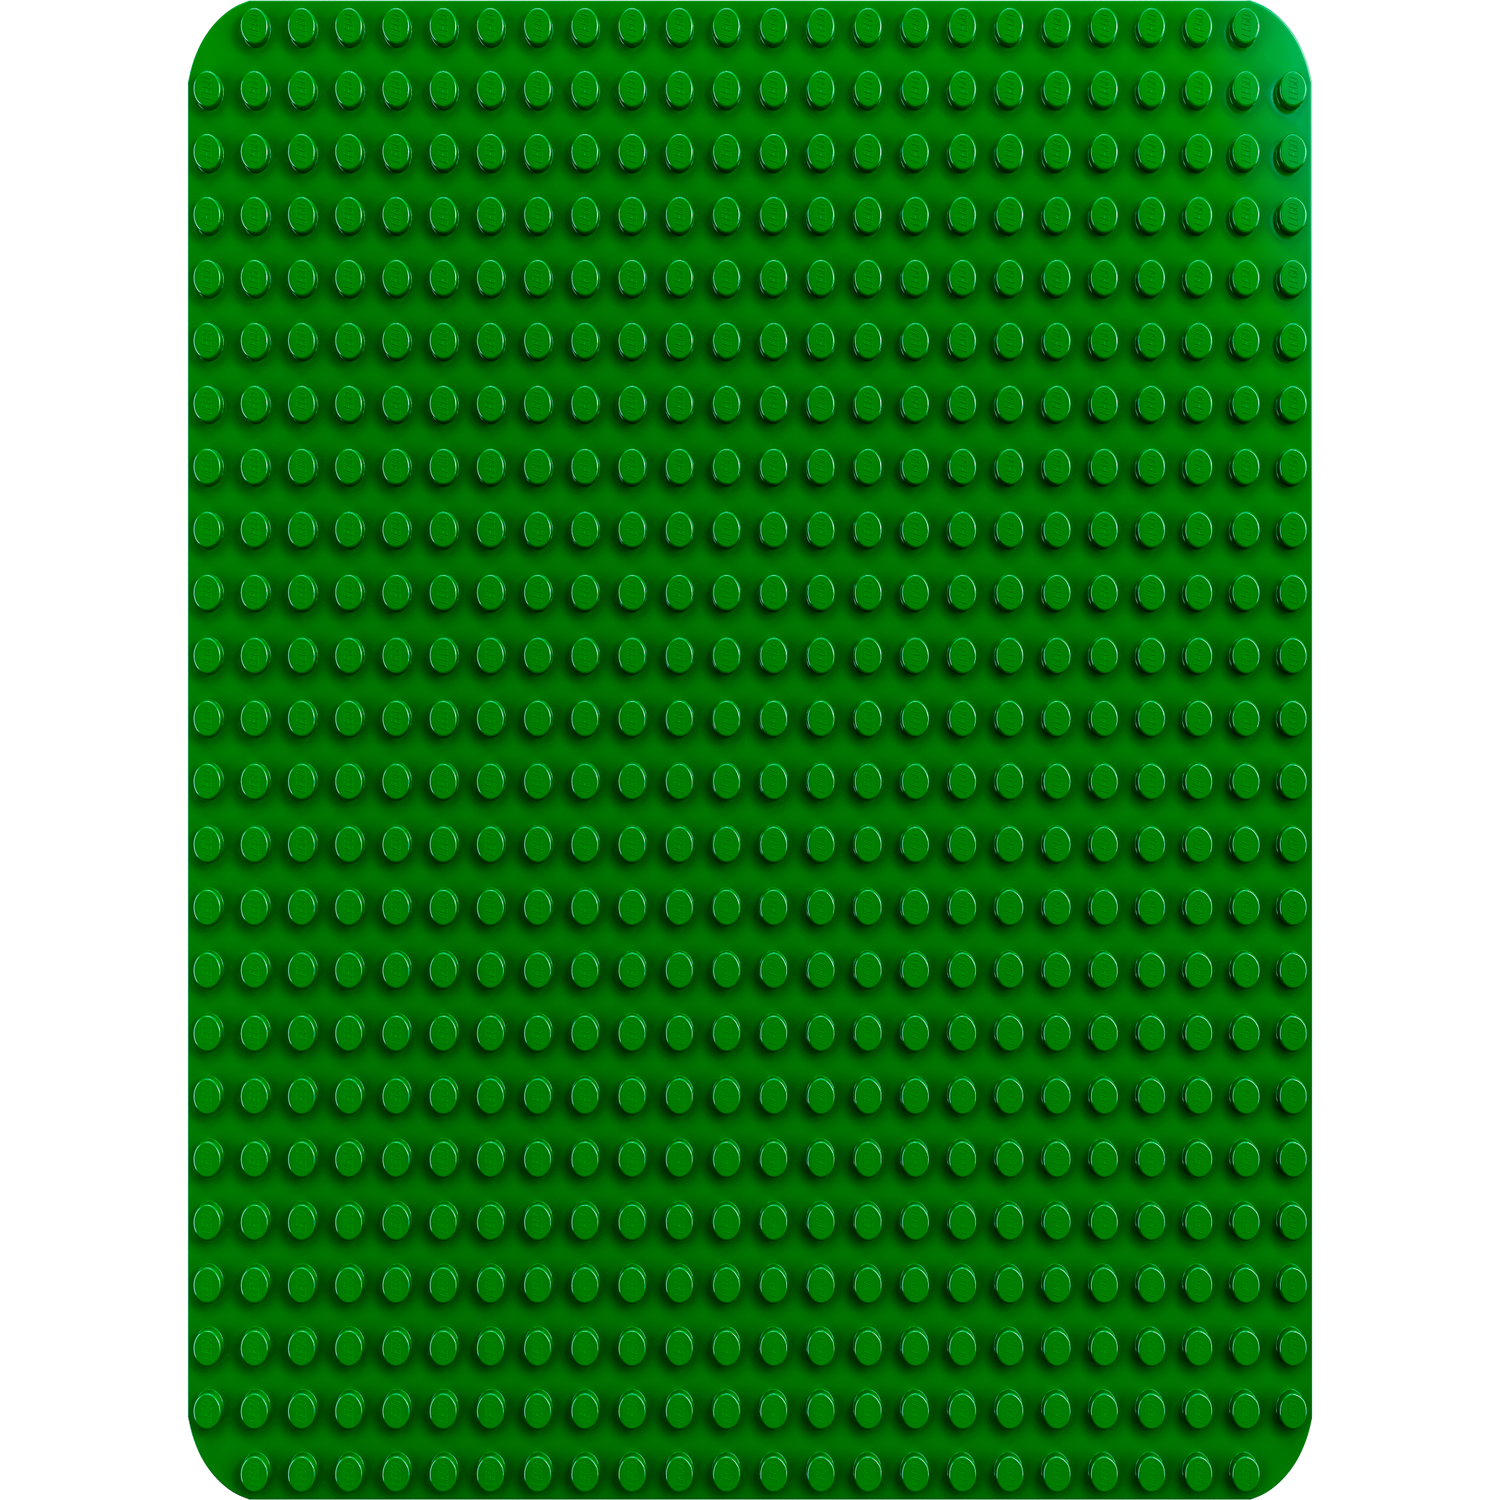 Duplo - Plaque de construction verte - LEGO